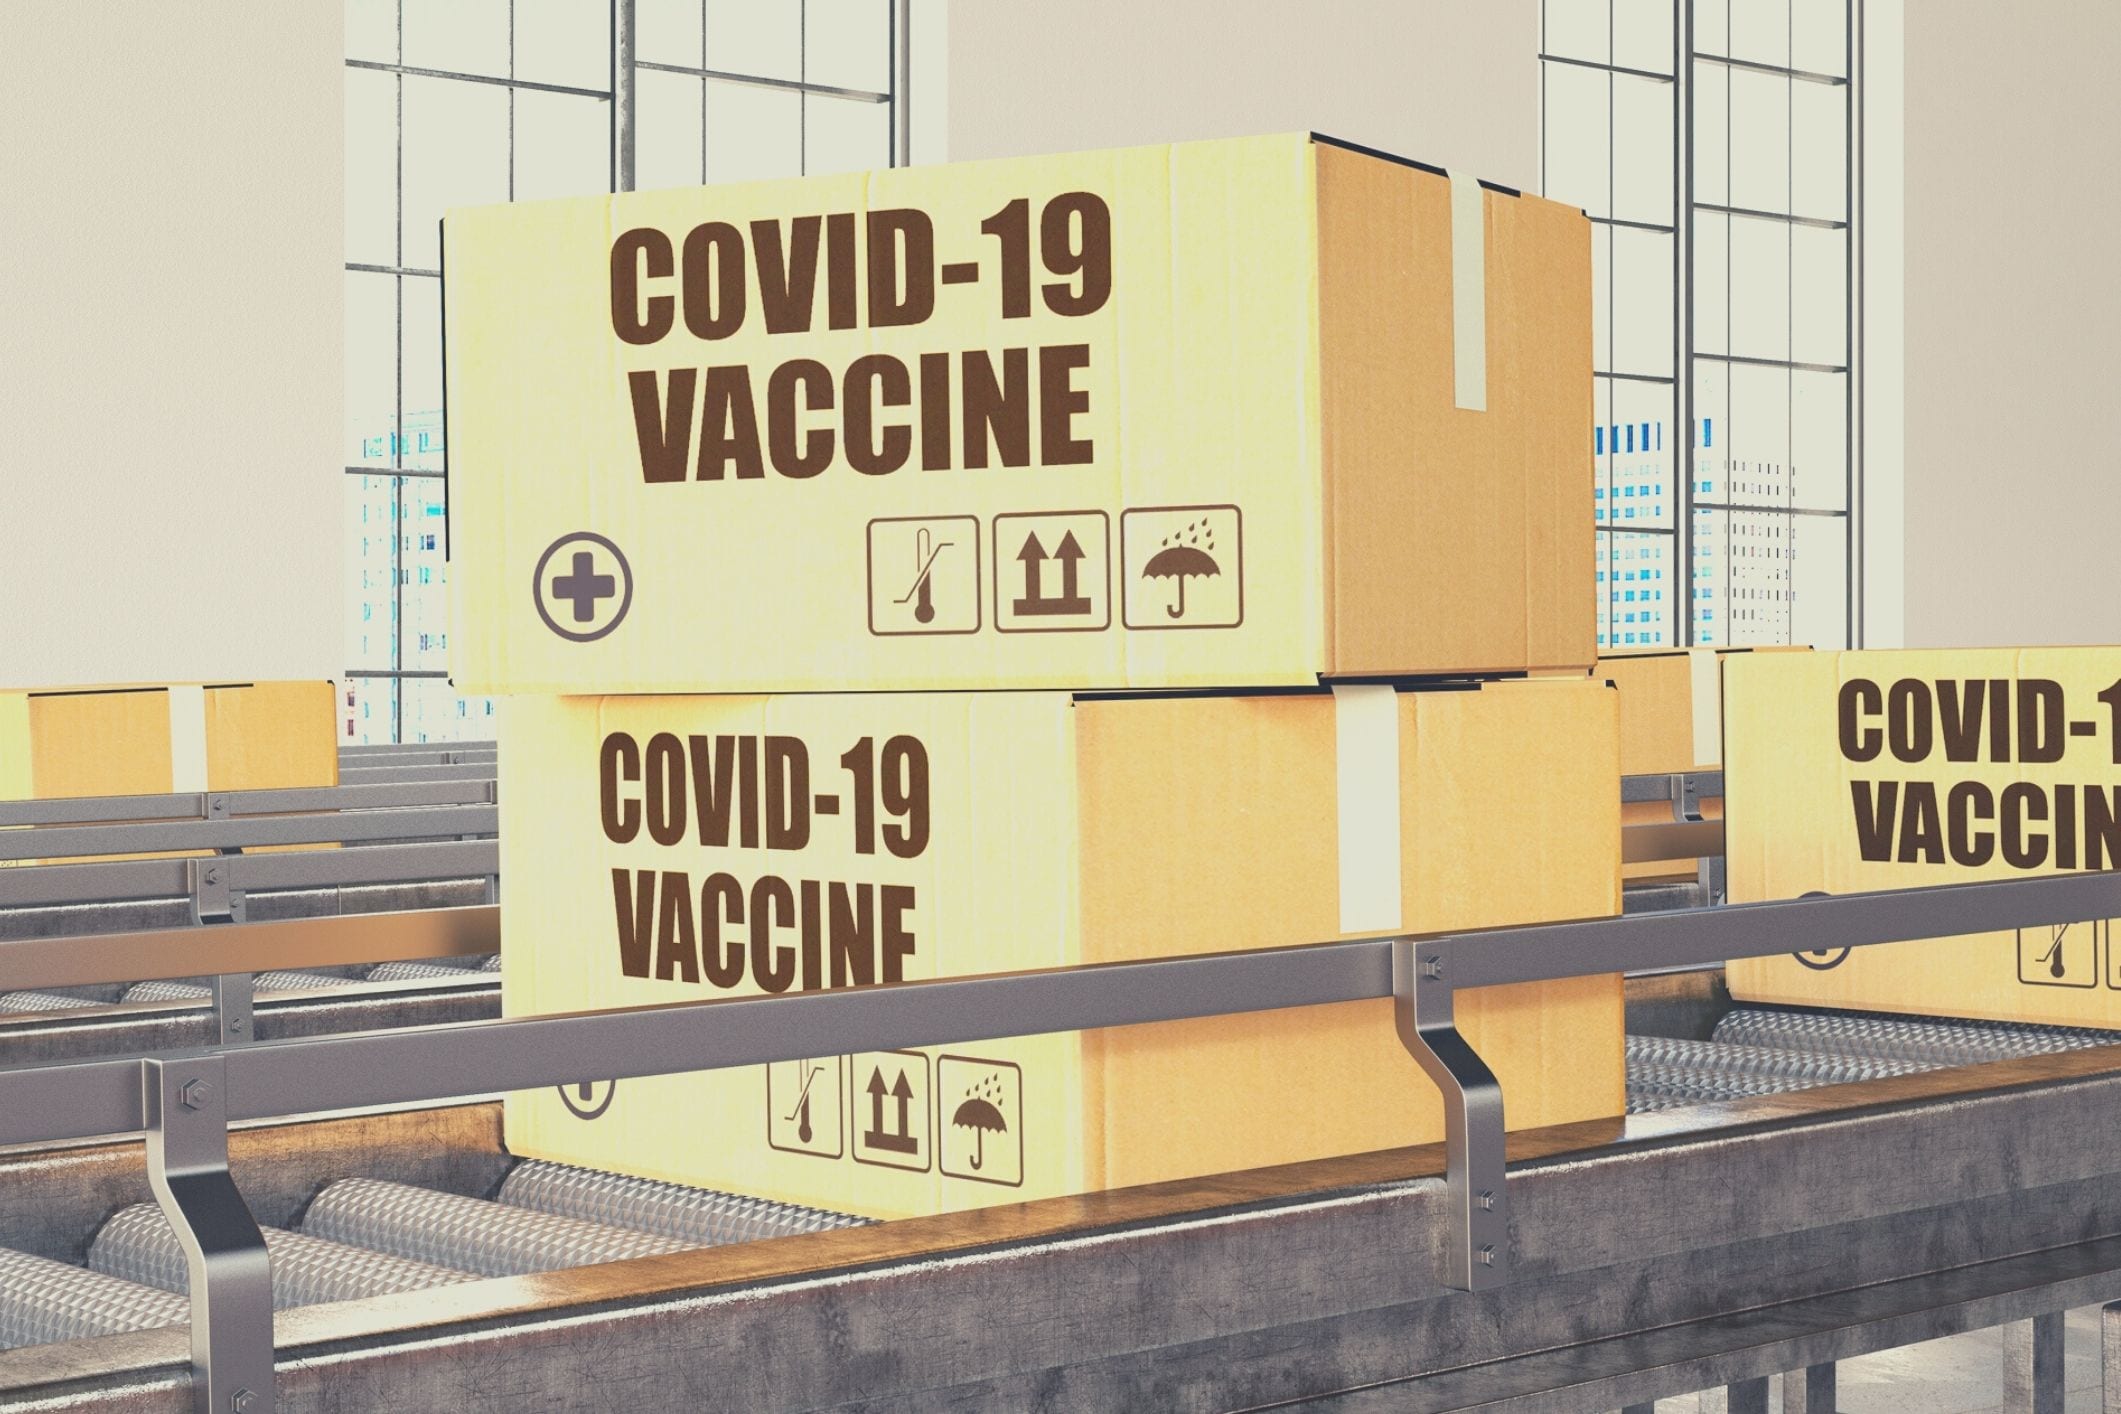 COVID-19 vaccine boxes on conveyor belt